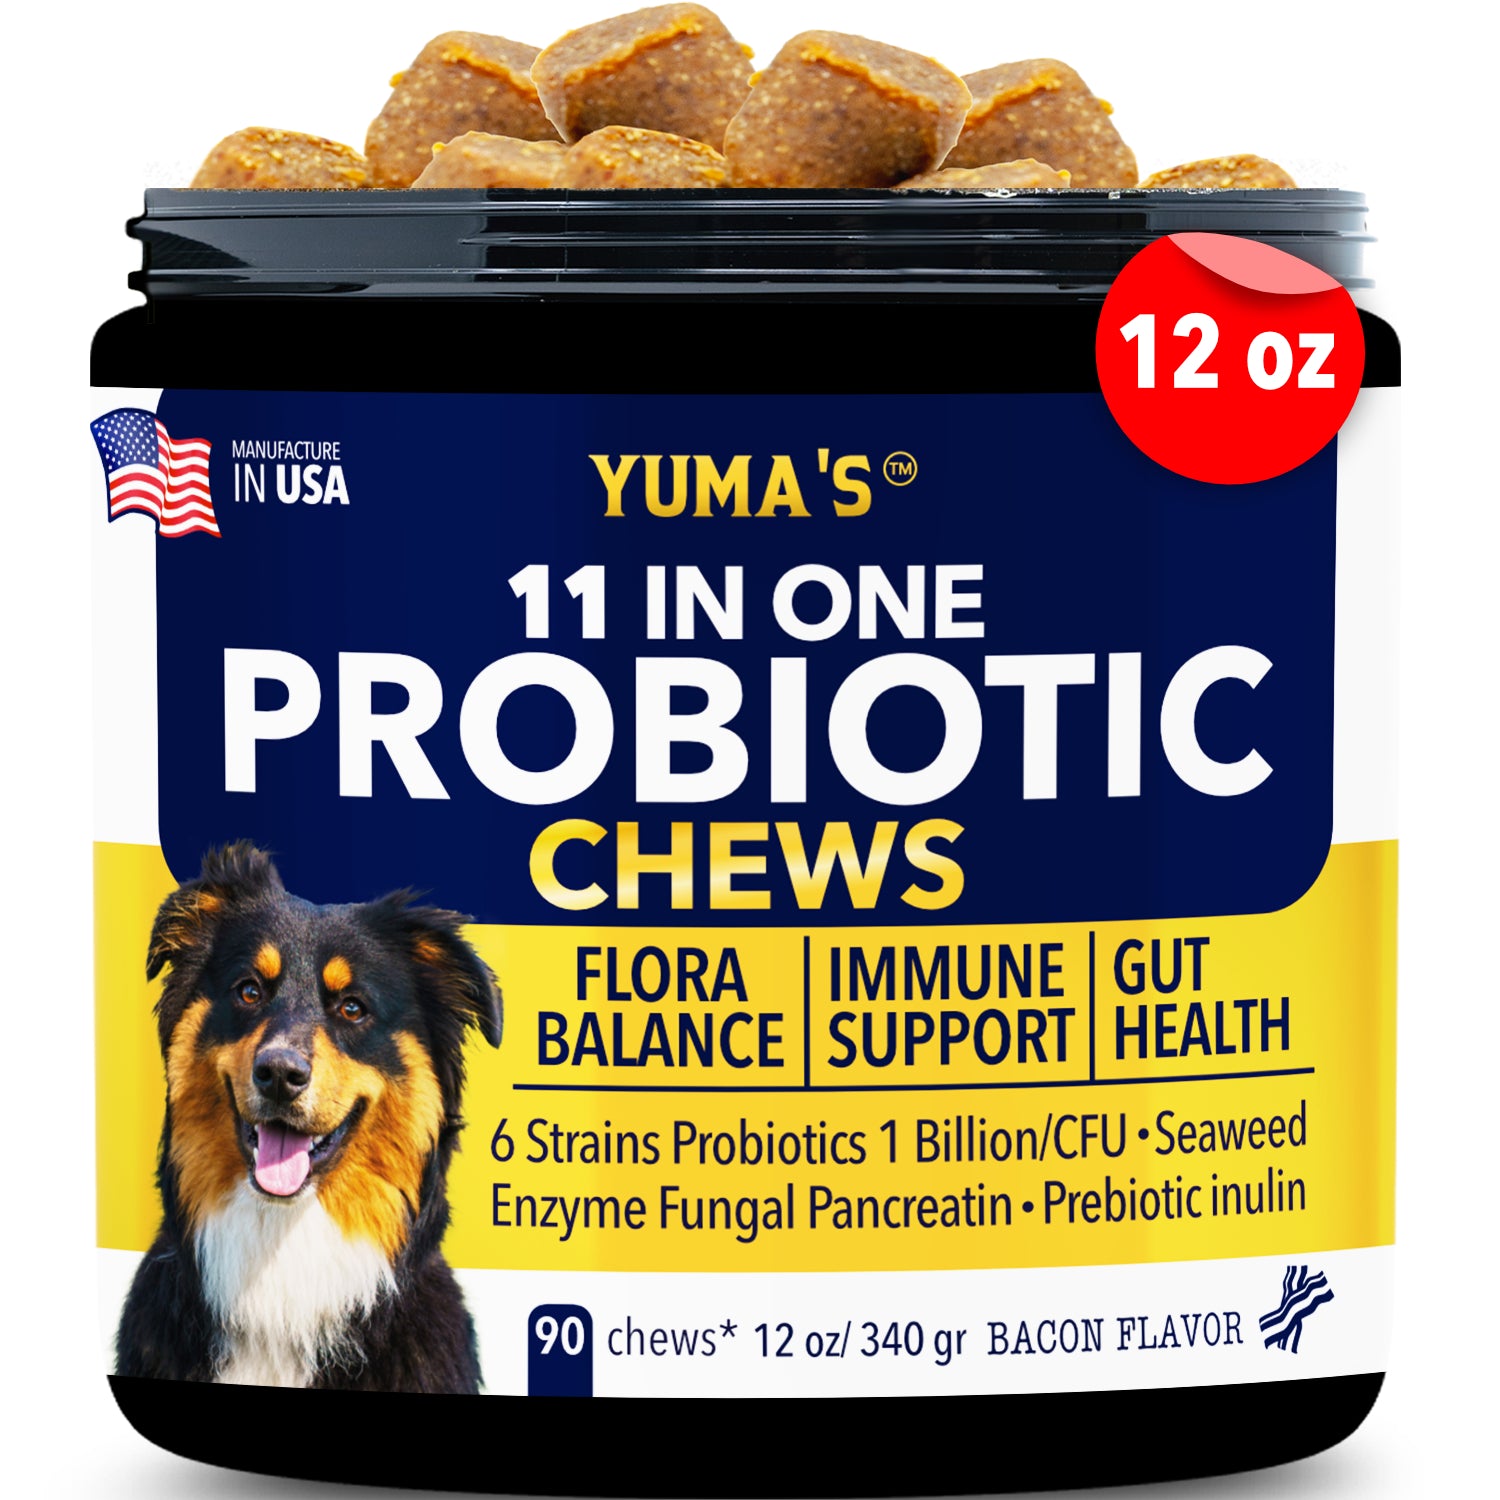 YUMA'S 11 in one probiotic chews